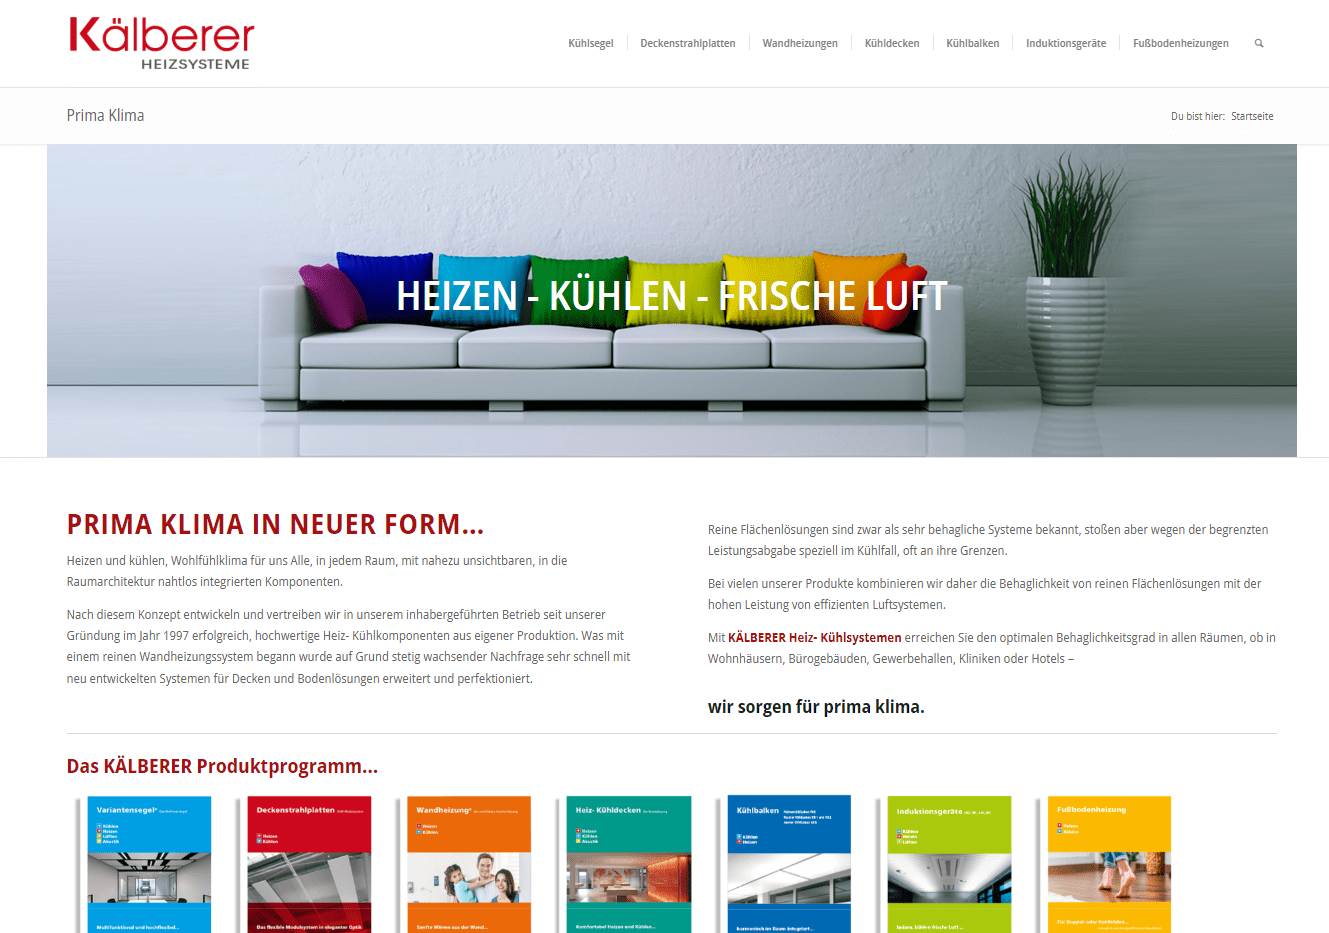 Referenz Kälberer Heizsysteme - Webdesign by AOS Hamburg